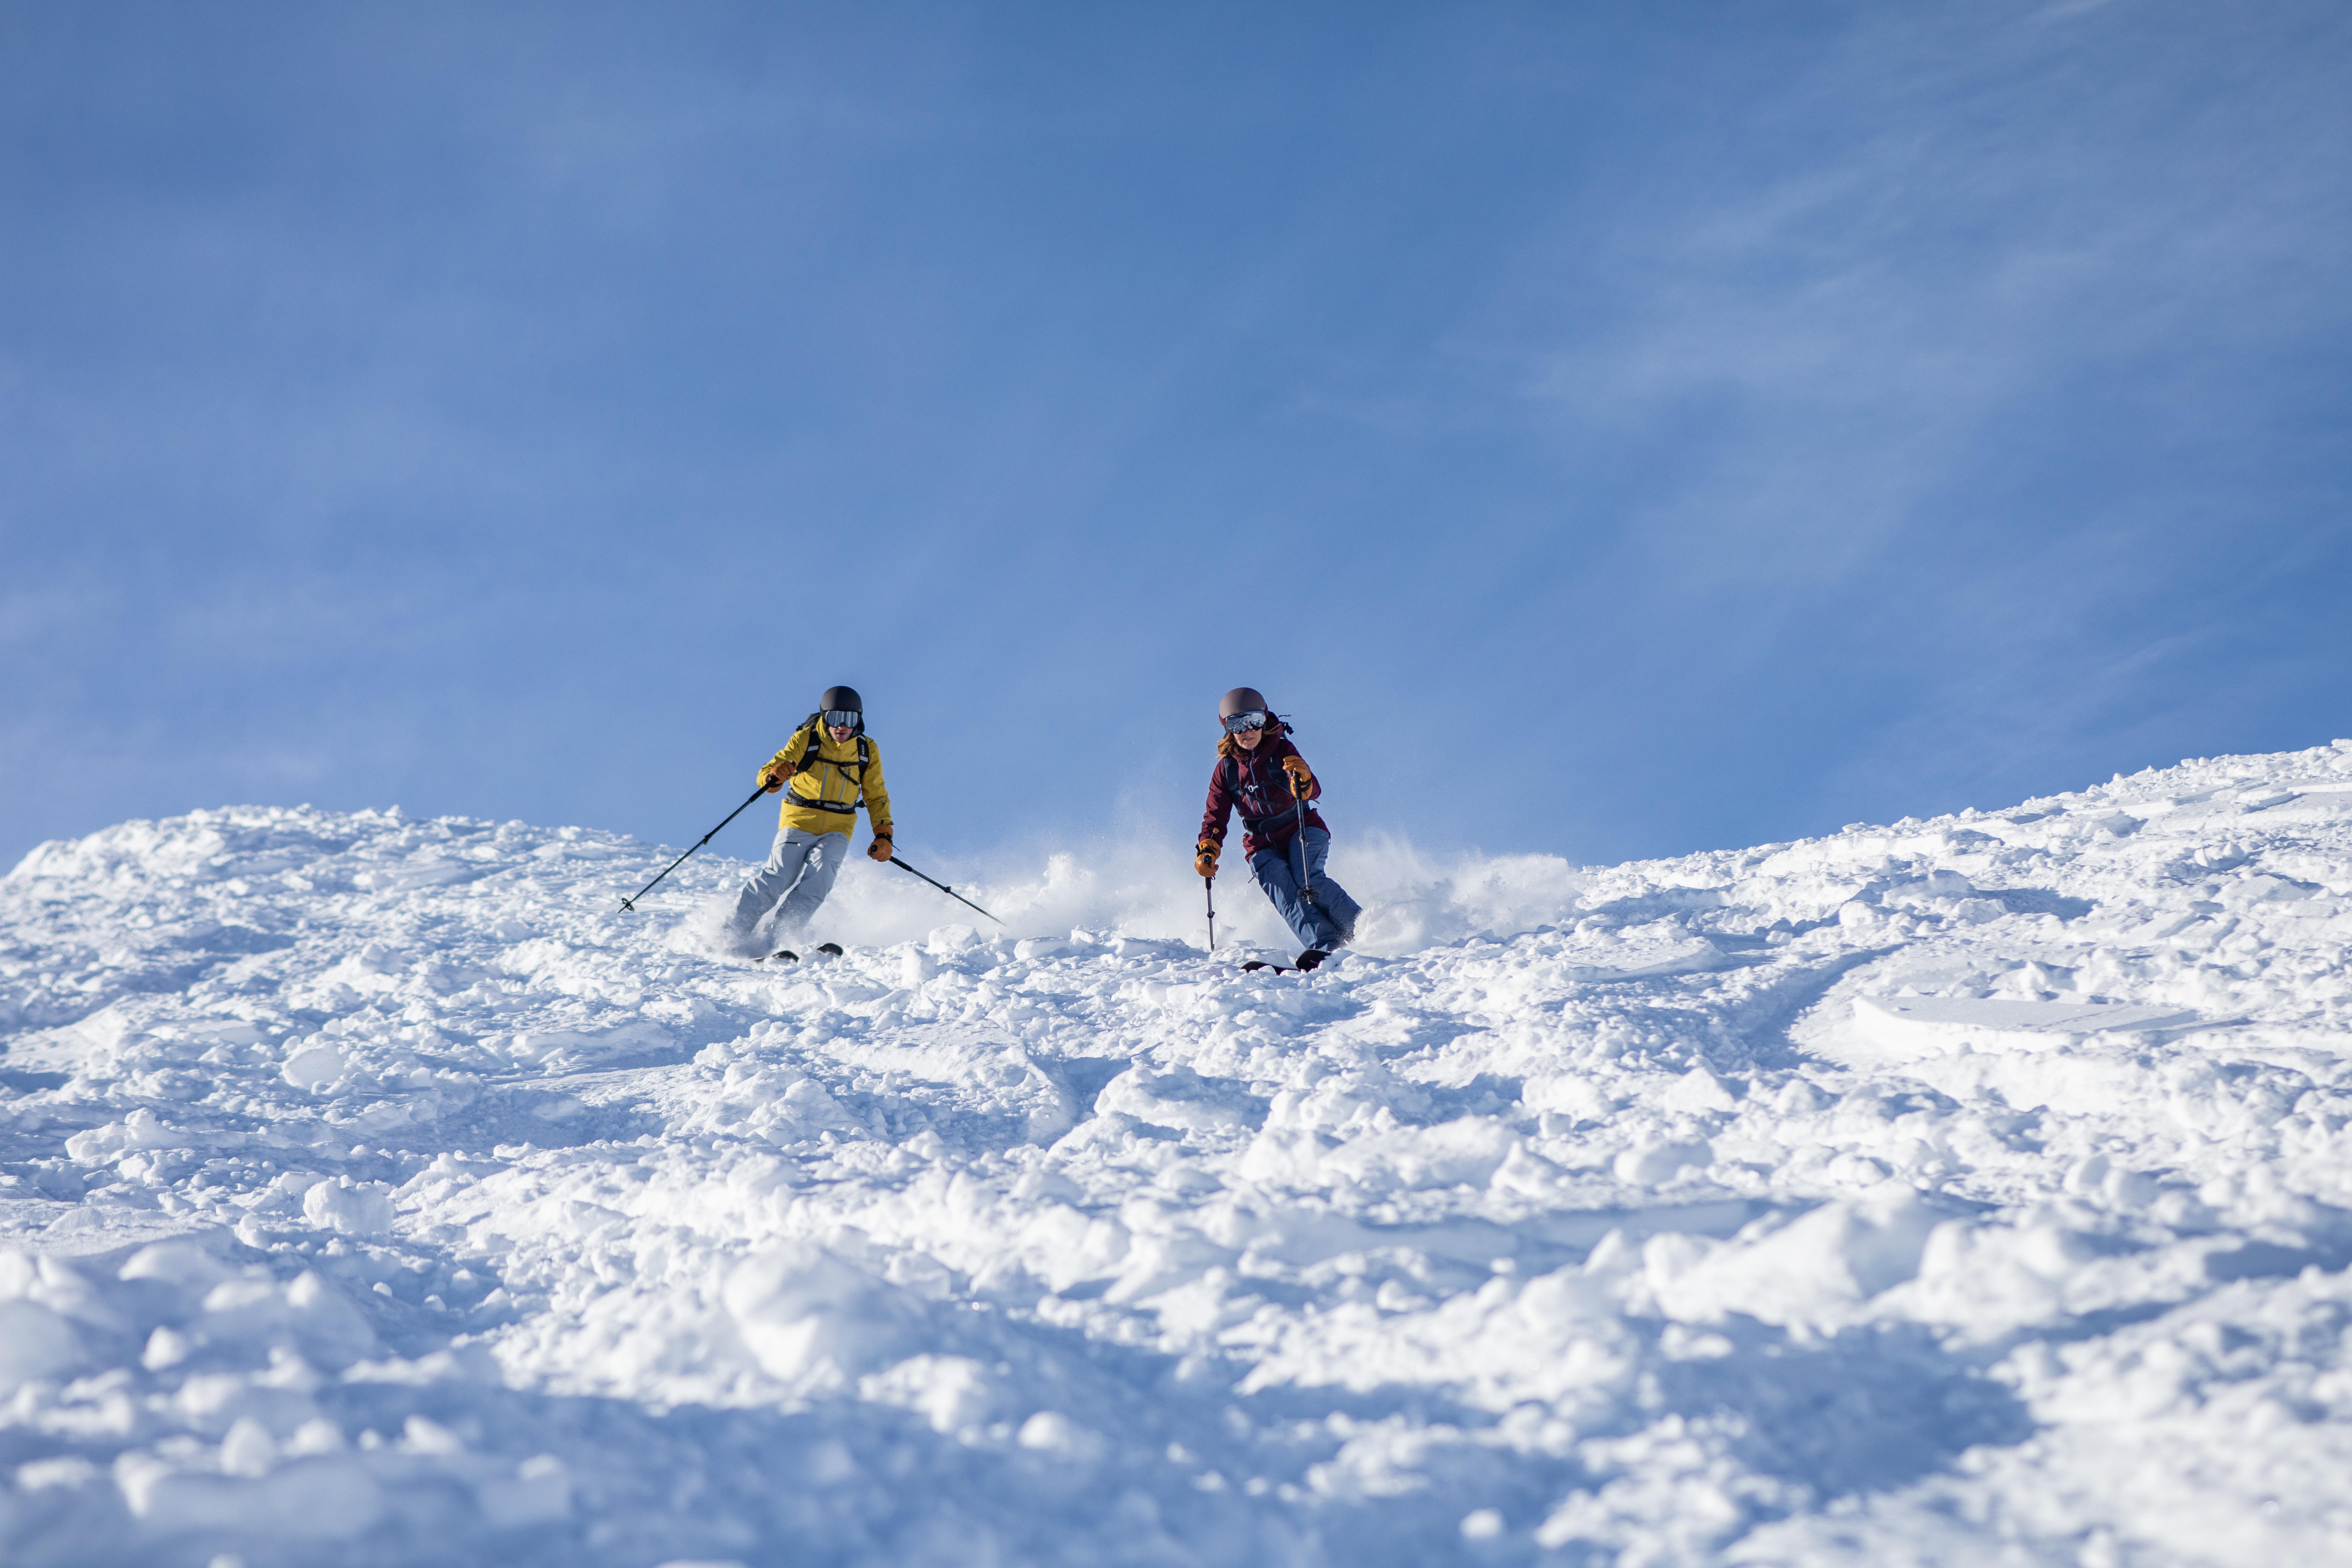 Skis hors-piste + fixations – Patrol 95 + Tyrolia Attack² 11 - WEDZE